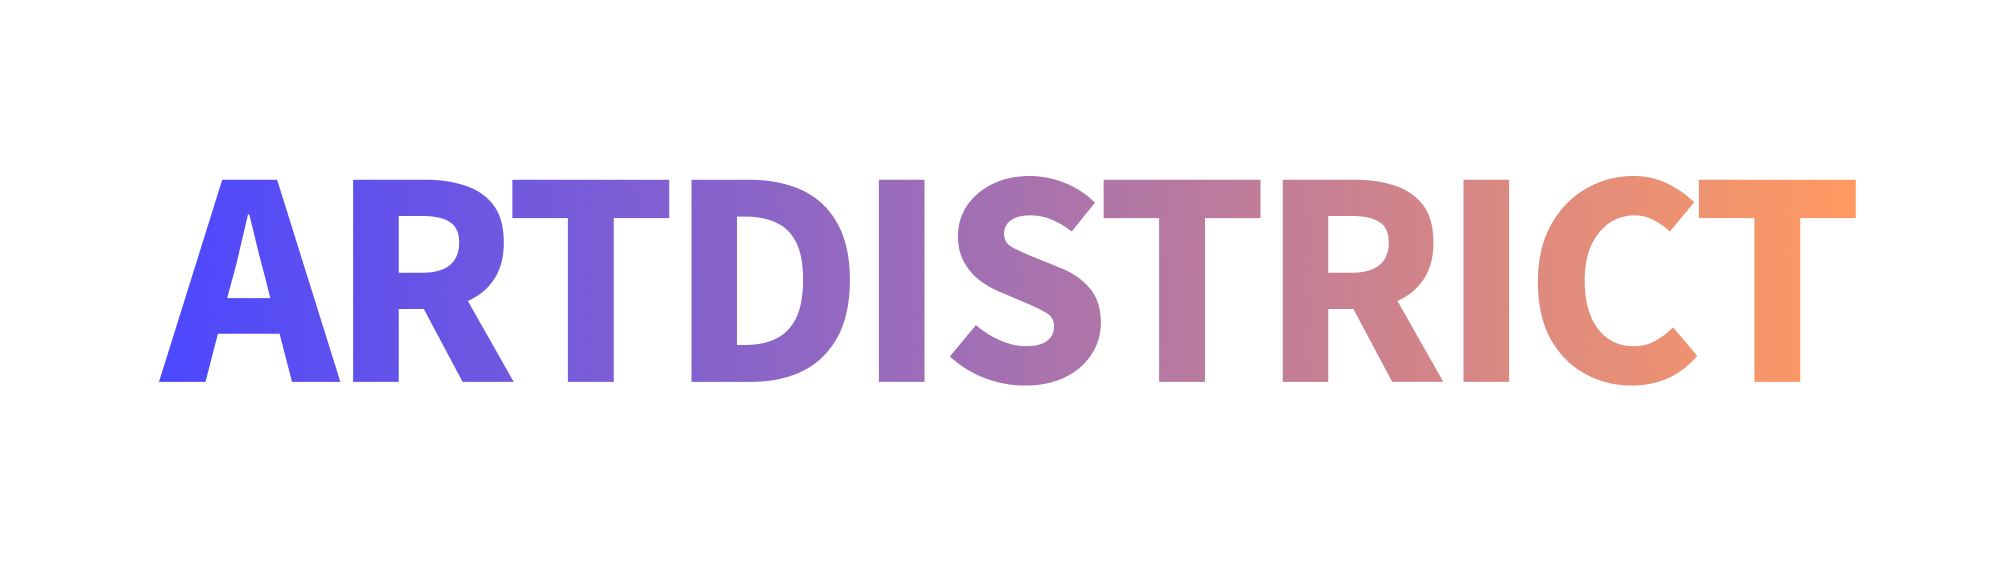 Artdistrict logo